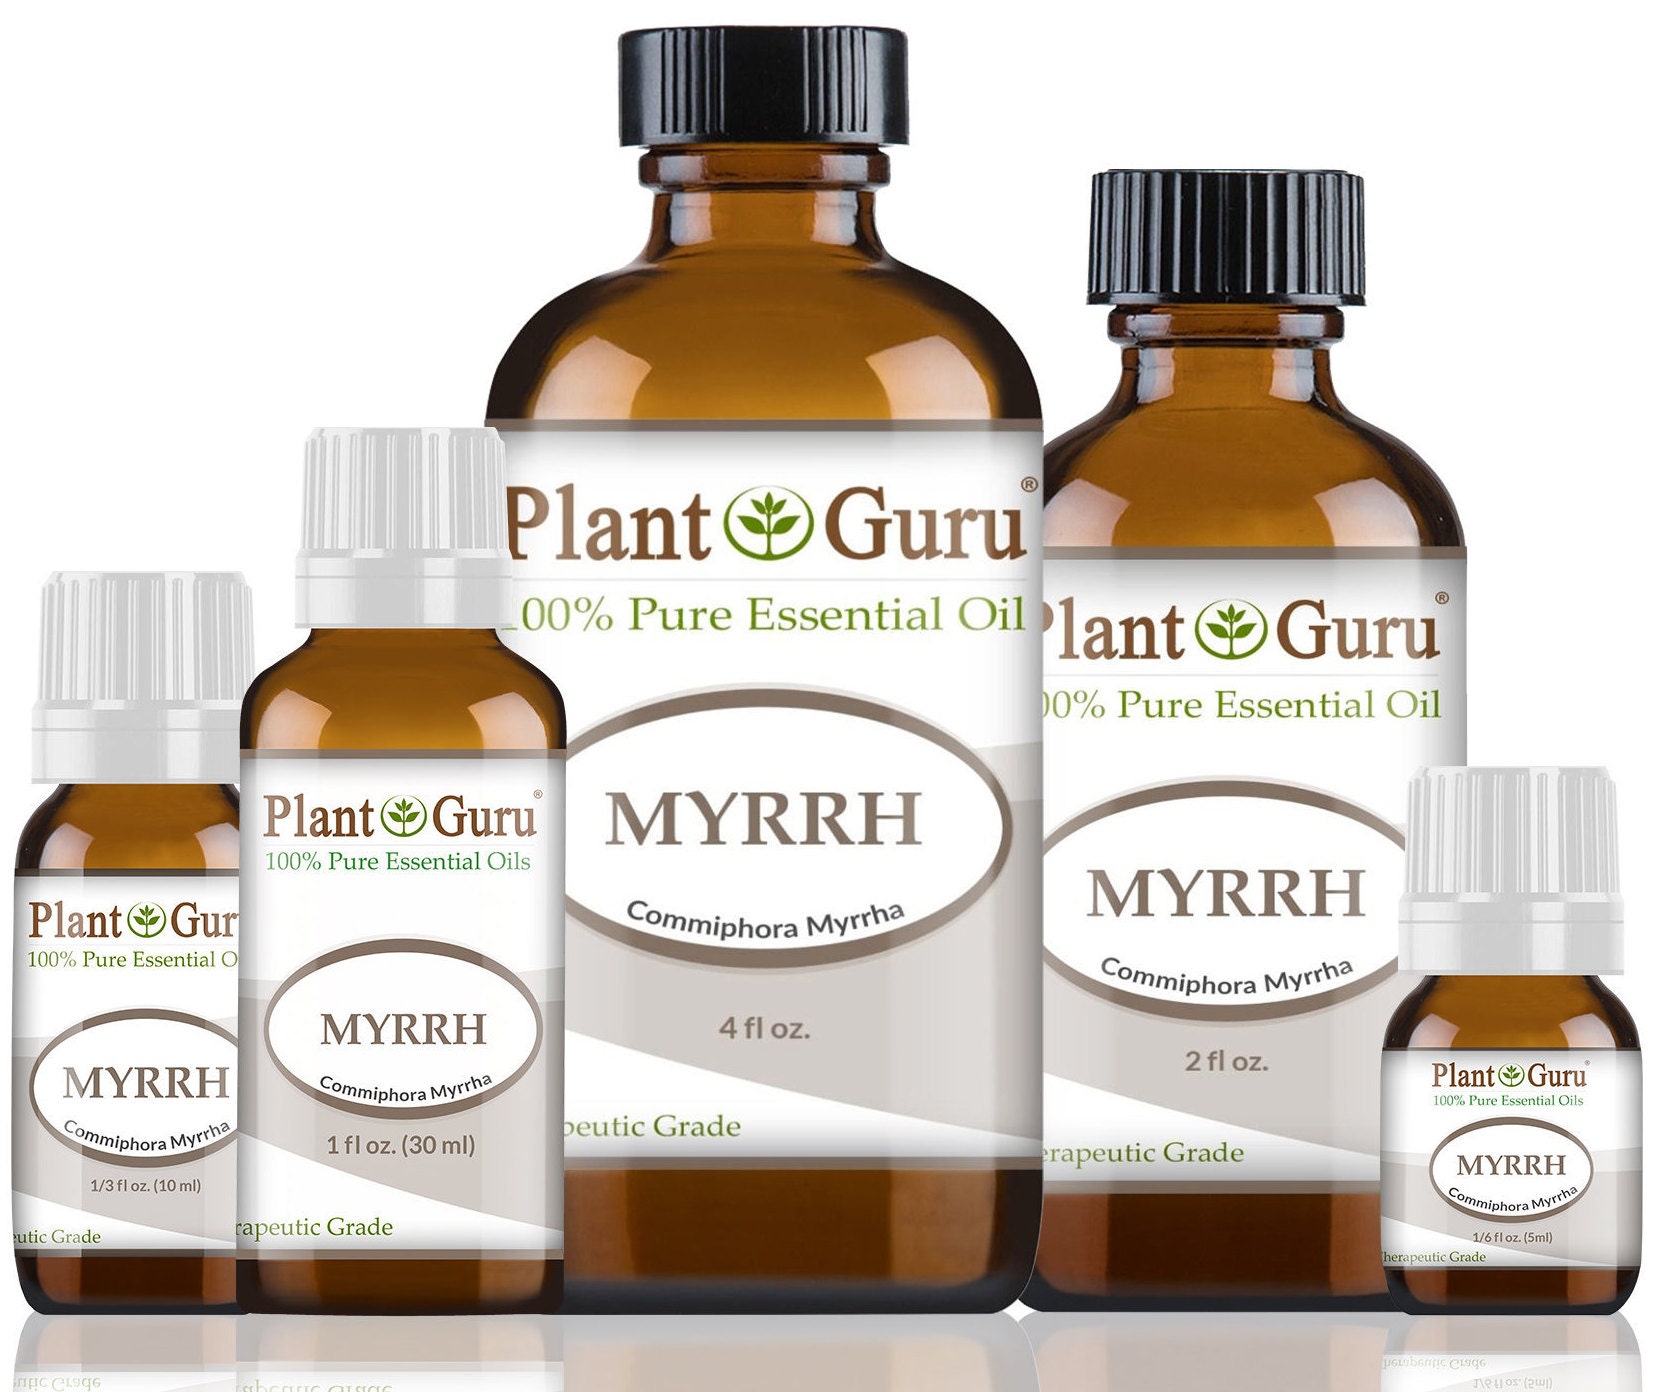 Myrrh Essential Oil, 0.5 fl oz at Whole Foods Market